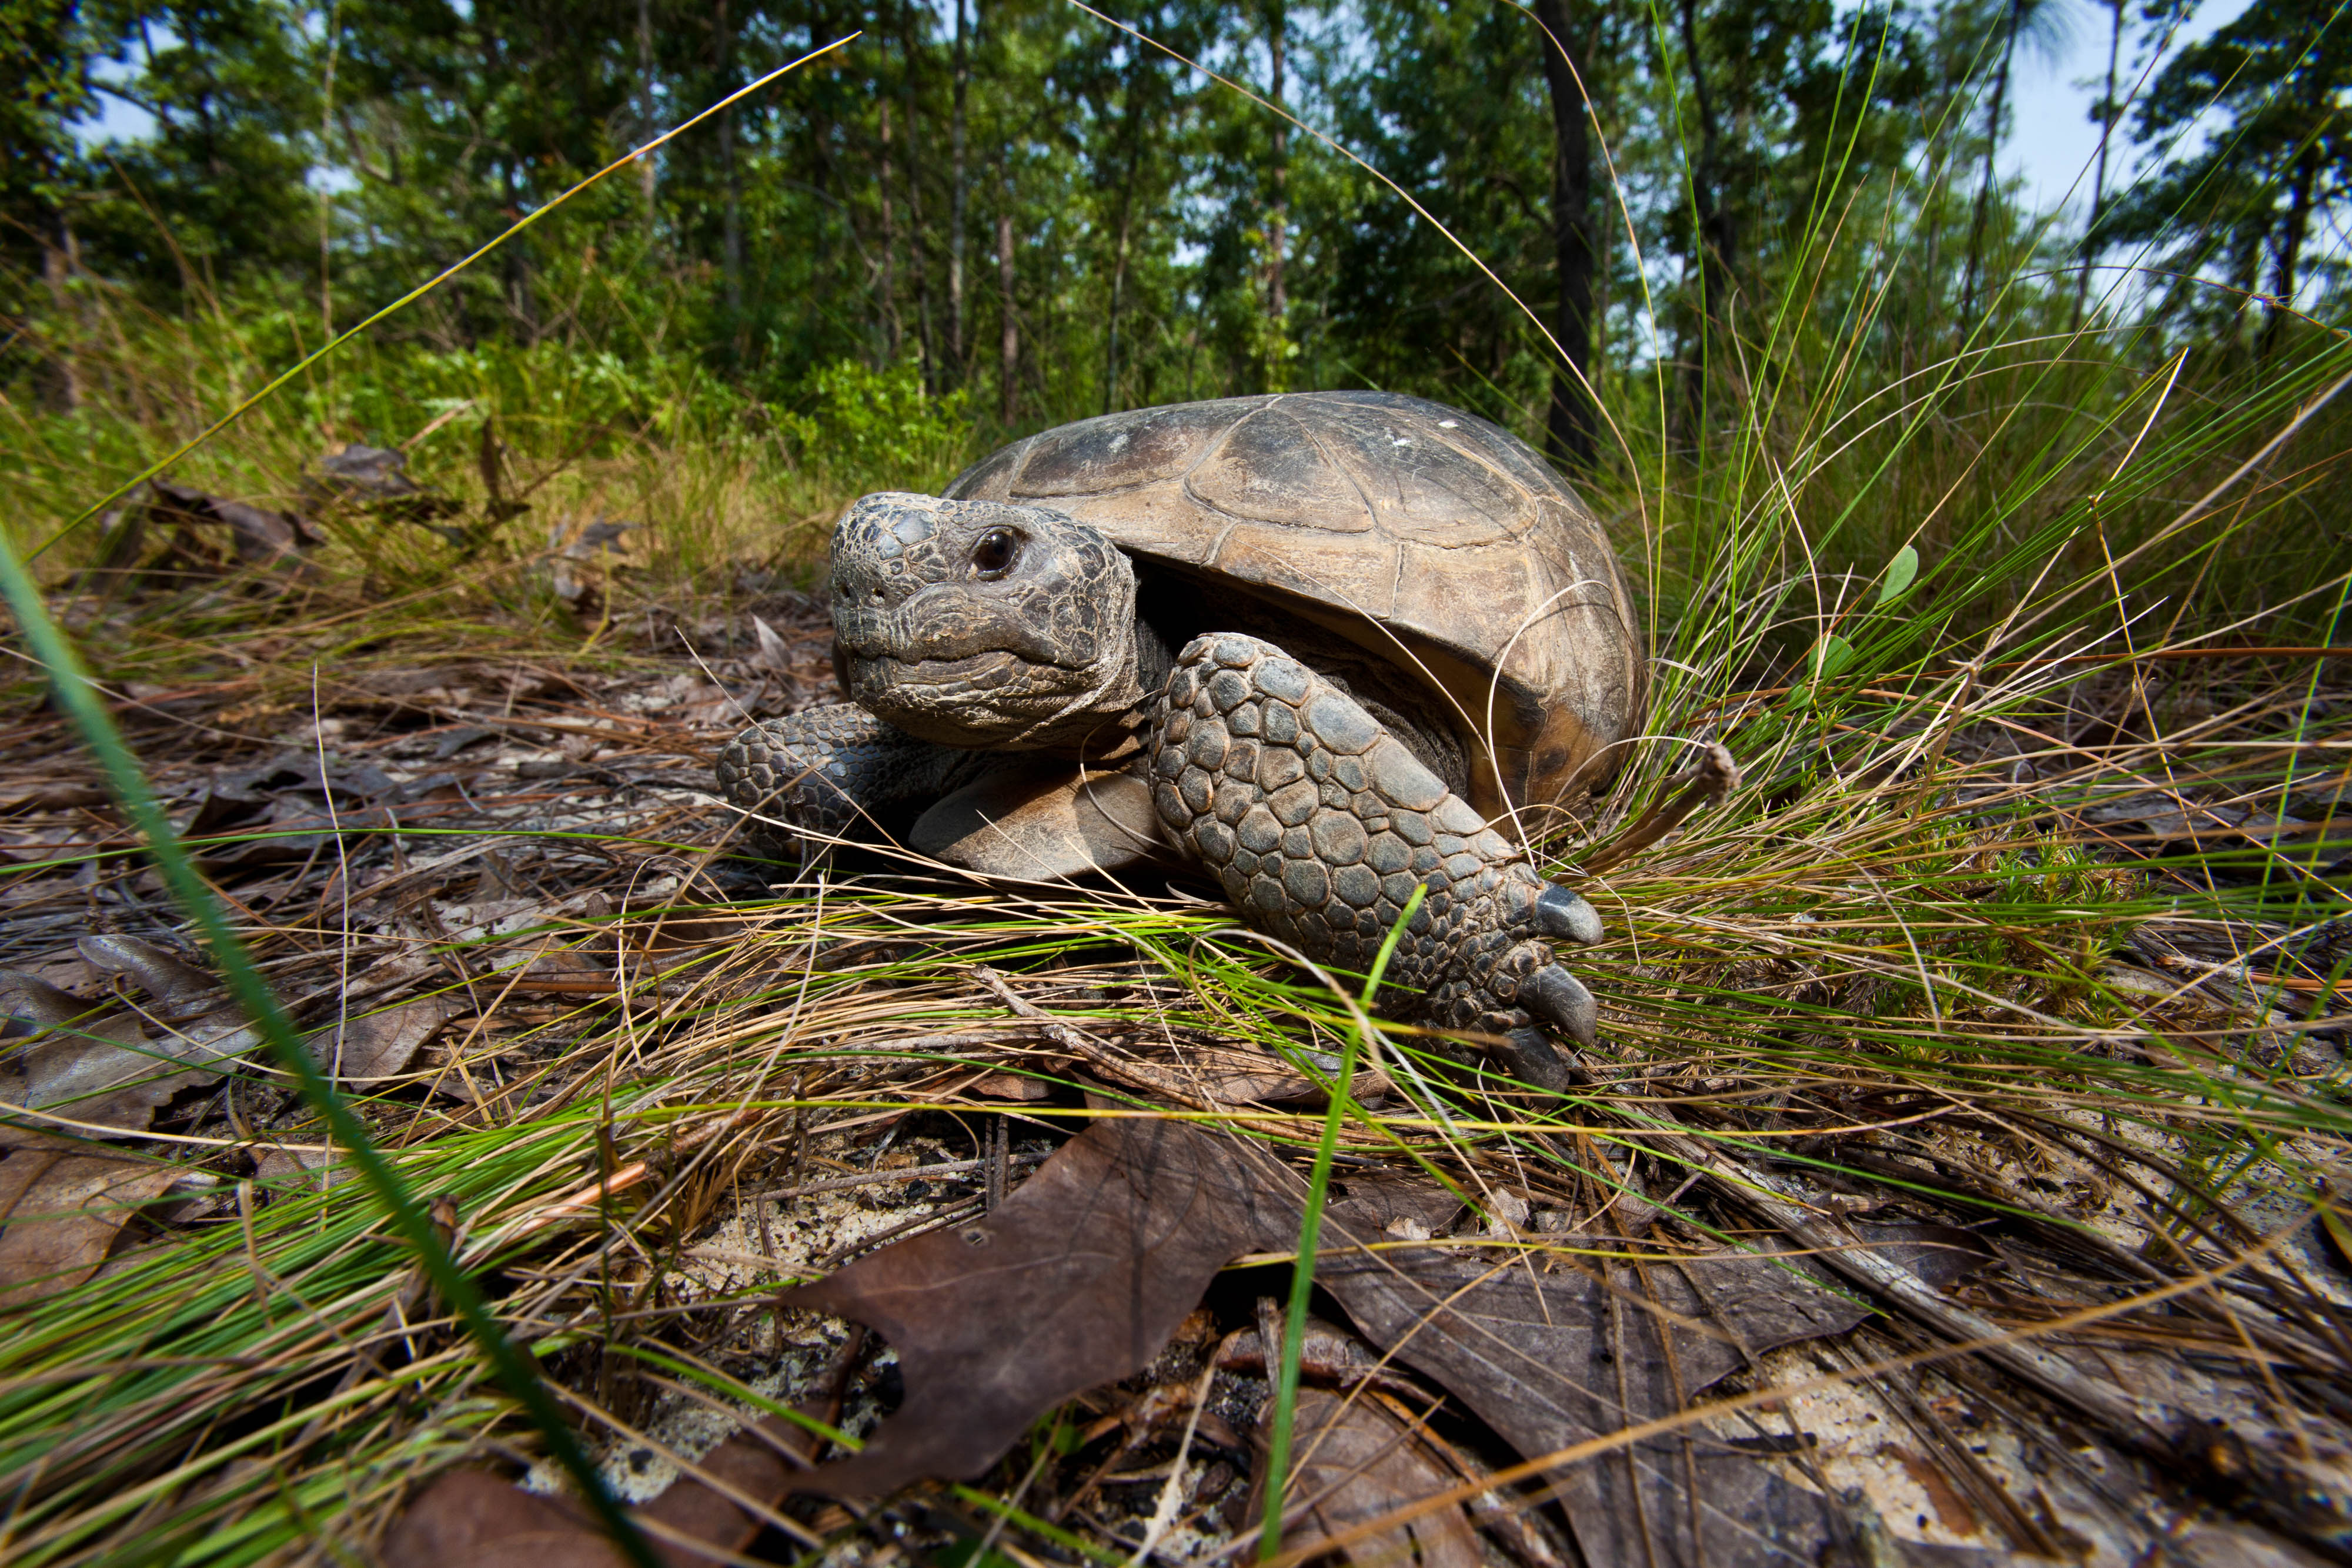 A gopher tortoise crawls over a clump of grass